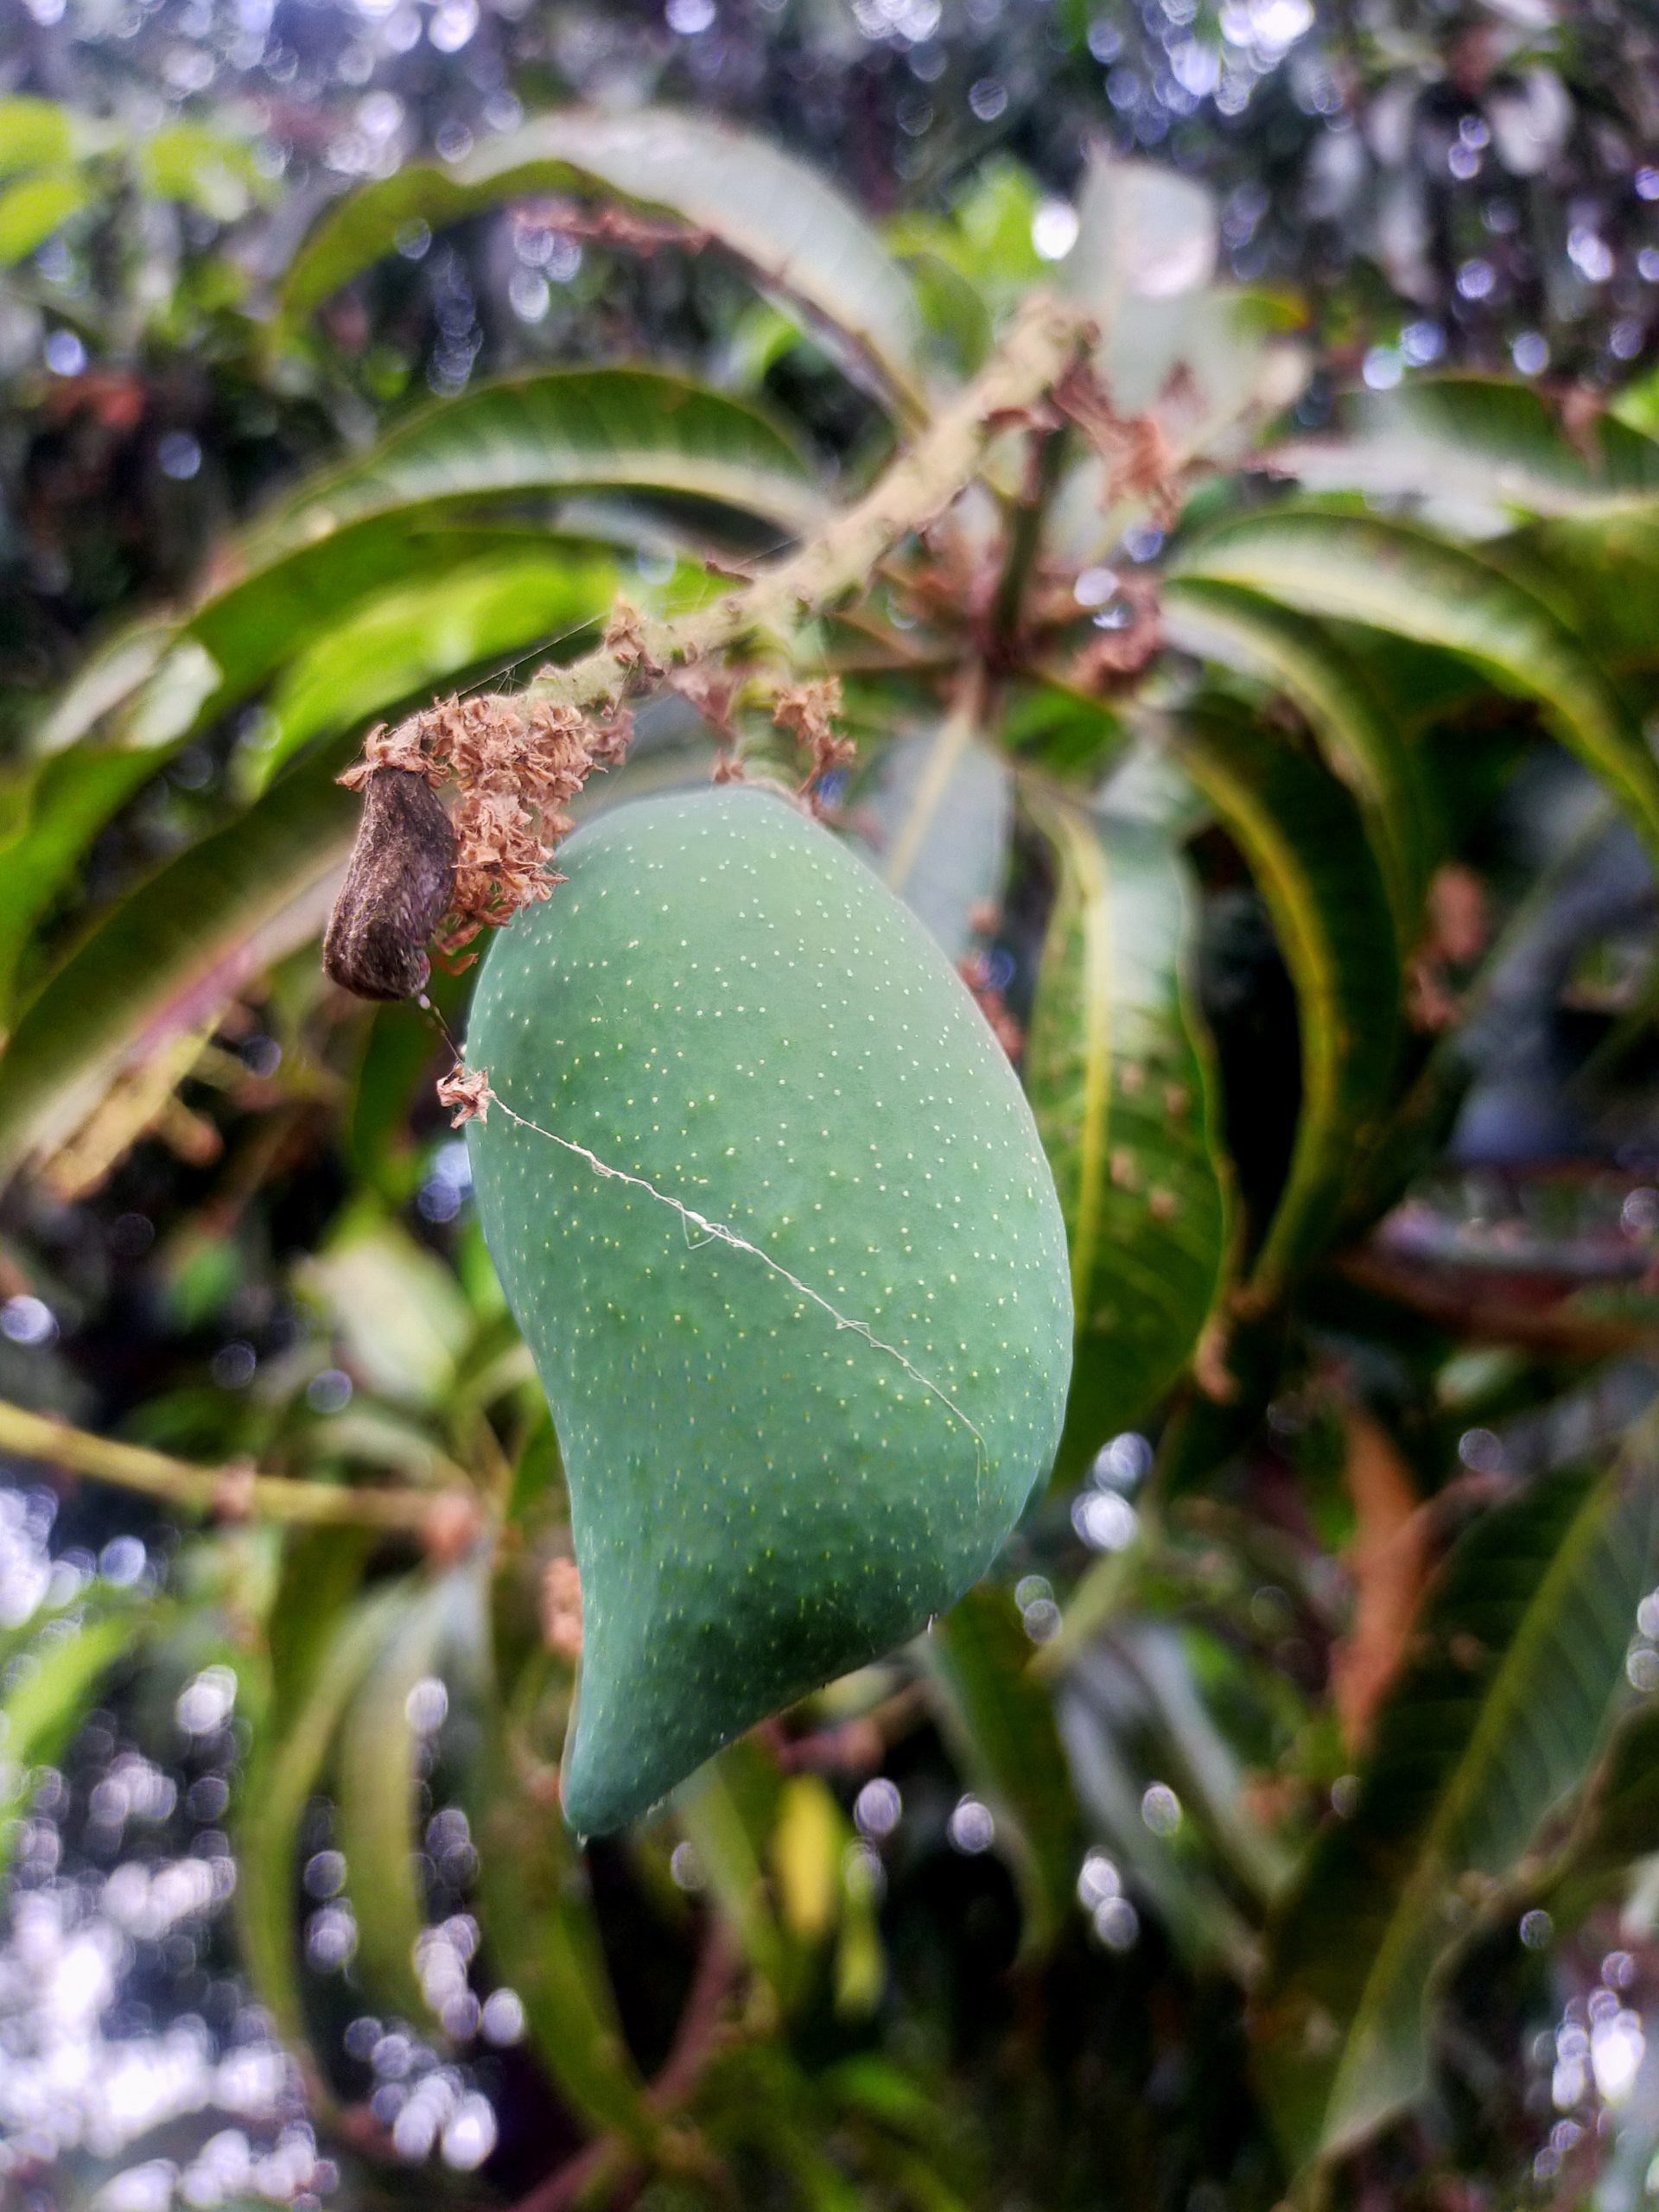 A green mango on its tree